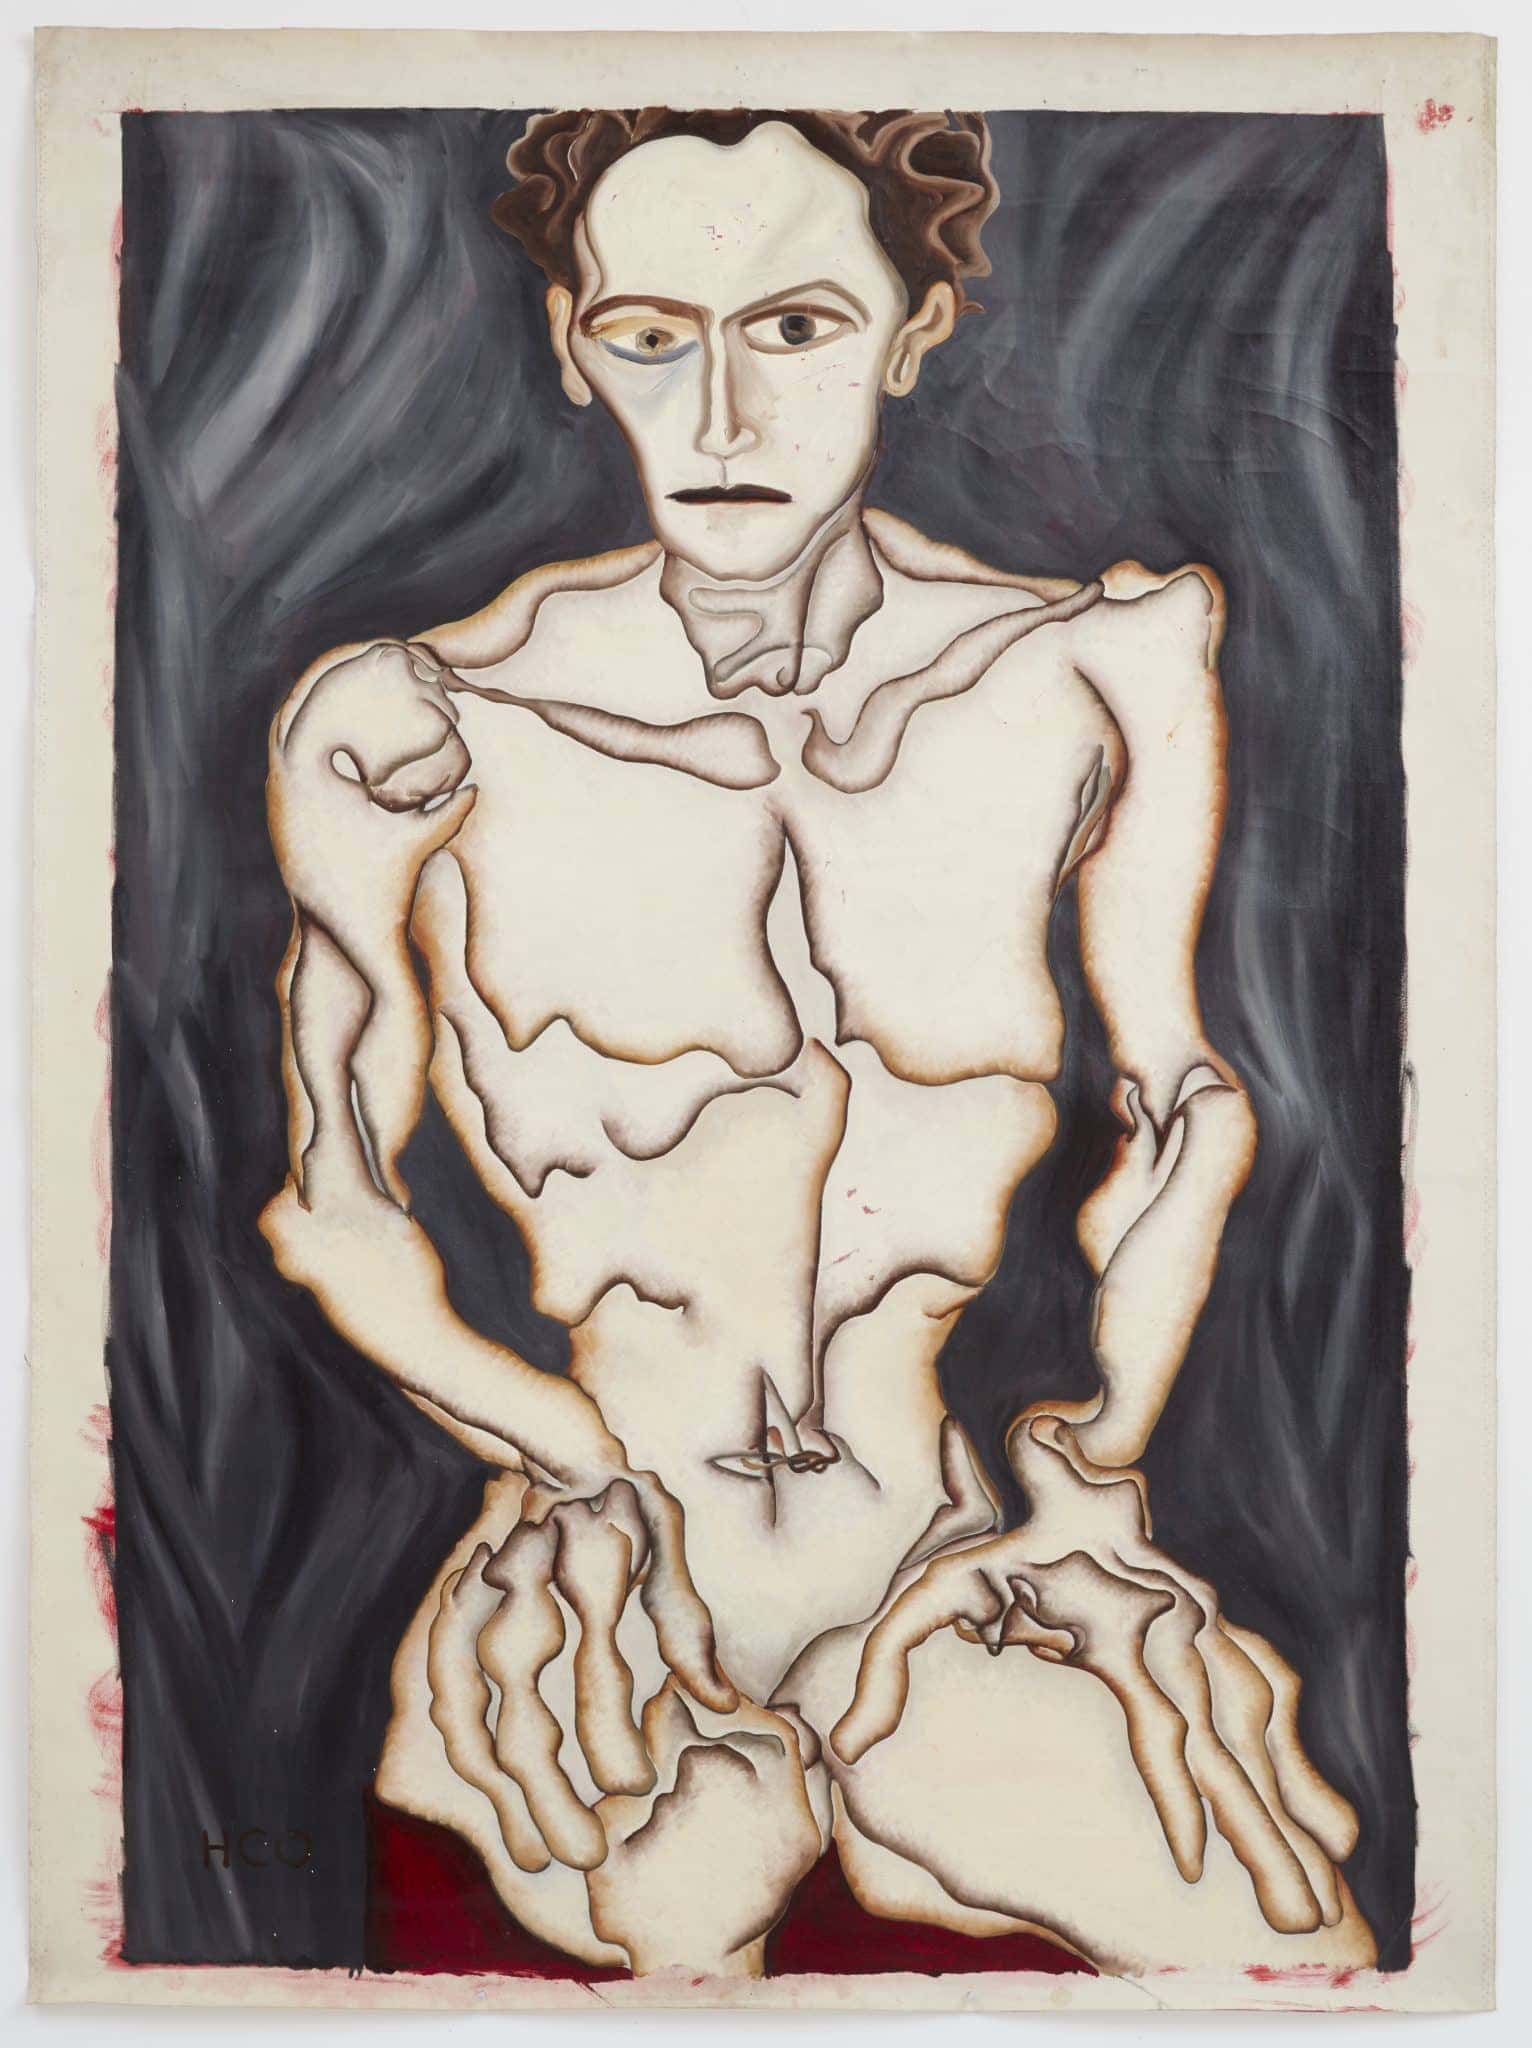 Edgar, ca. 1985, Oil on canvas, 75 x 55 ½ inches